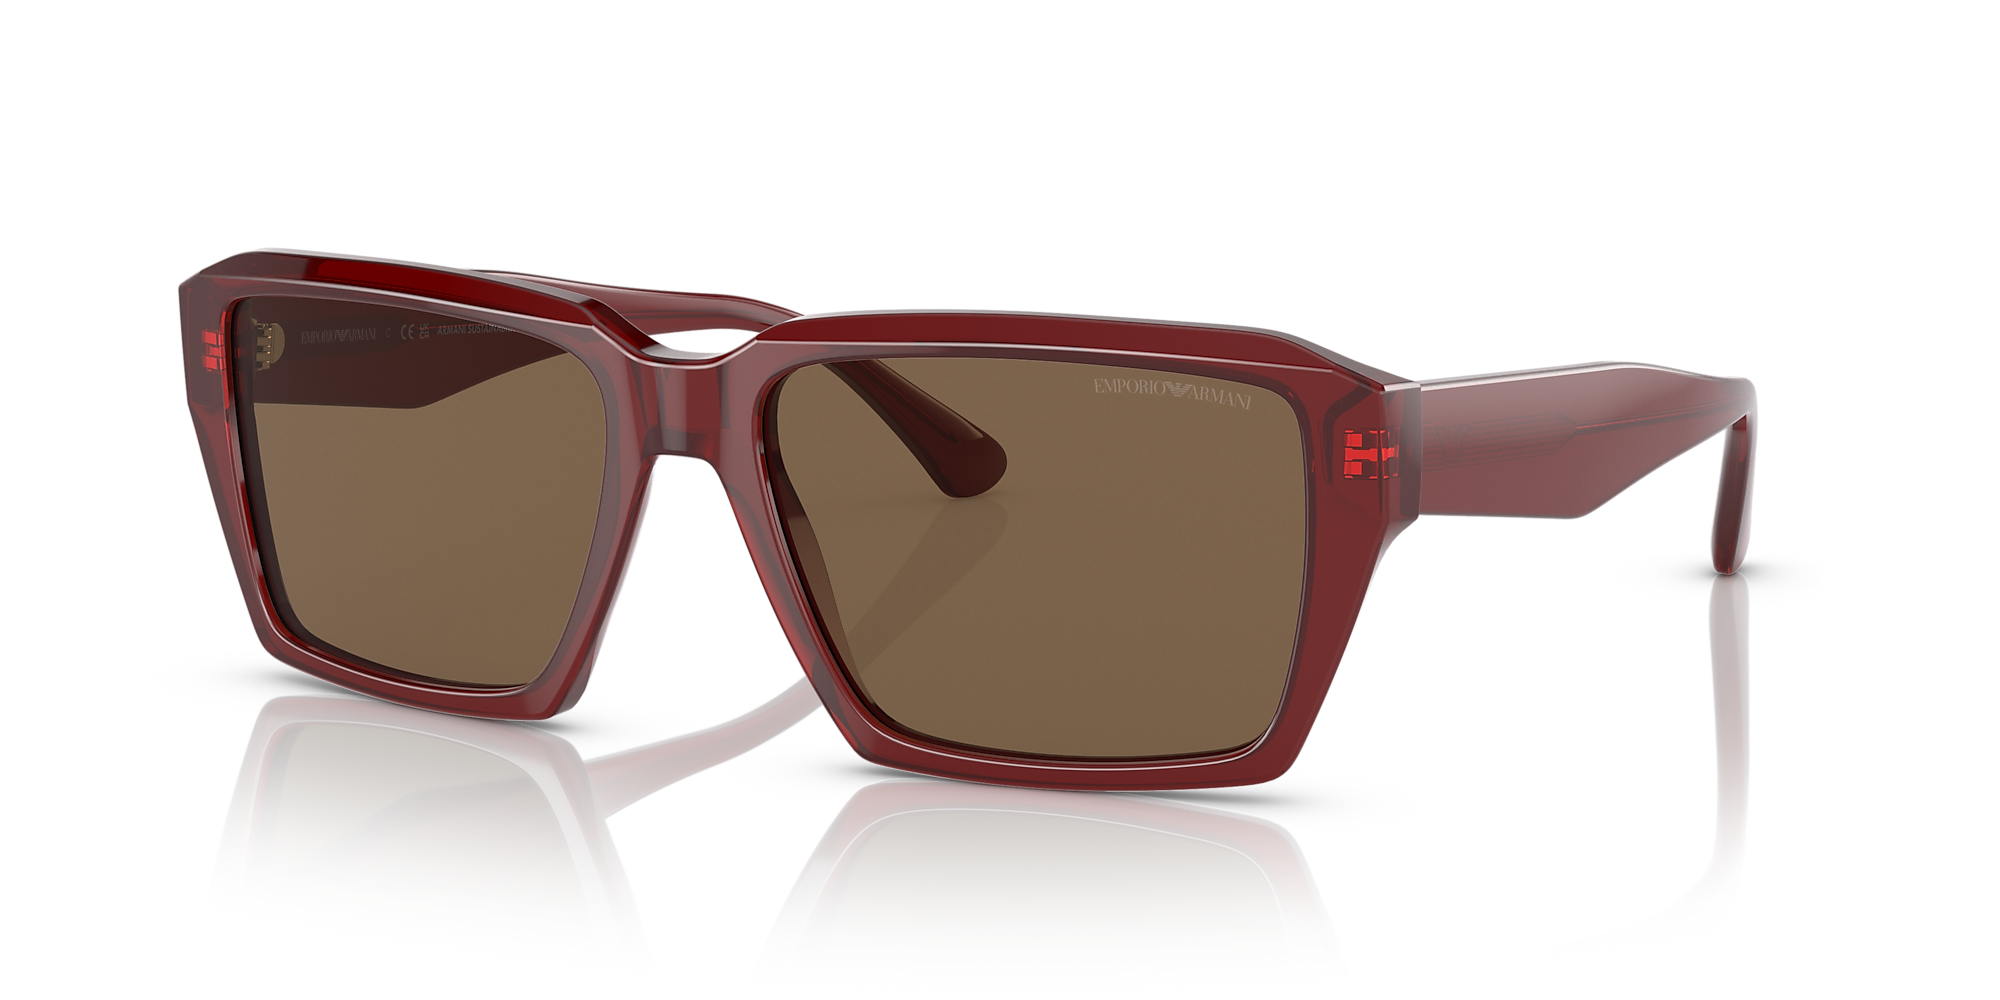 Emporio Armani EA4186 58 Dark Brown & Shiny Transparent Red Sunglasses ...